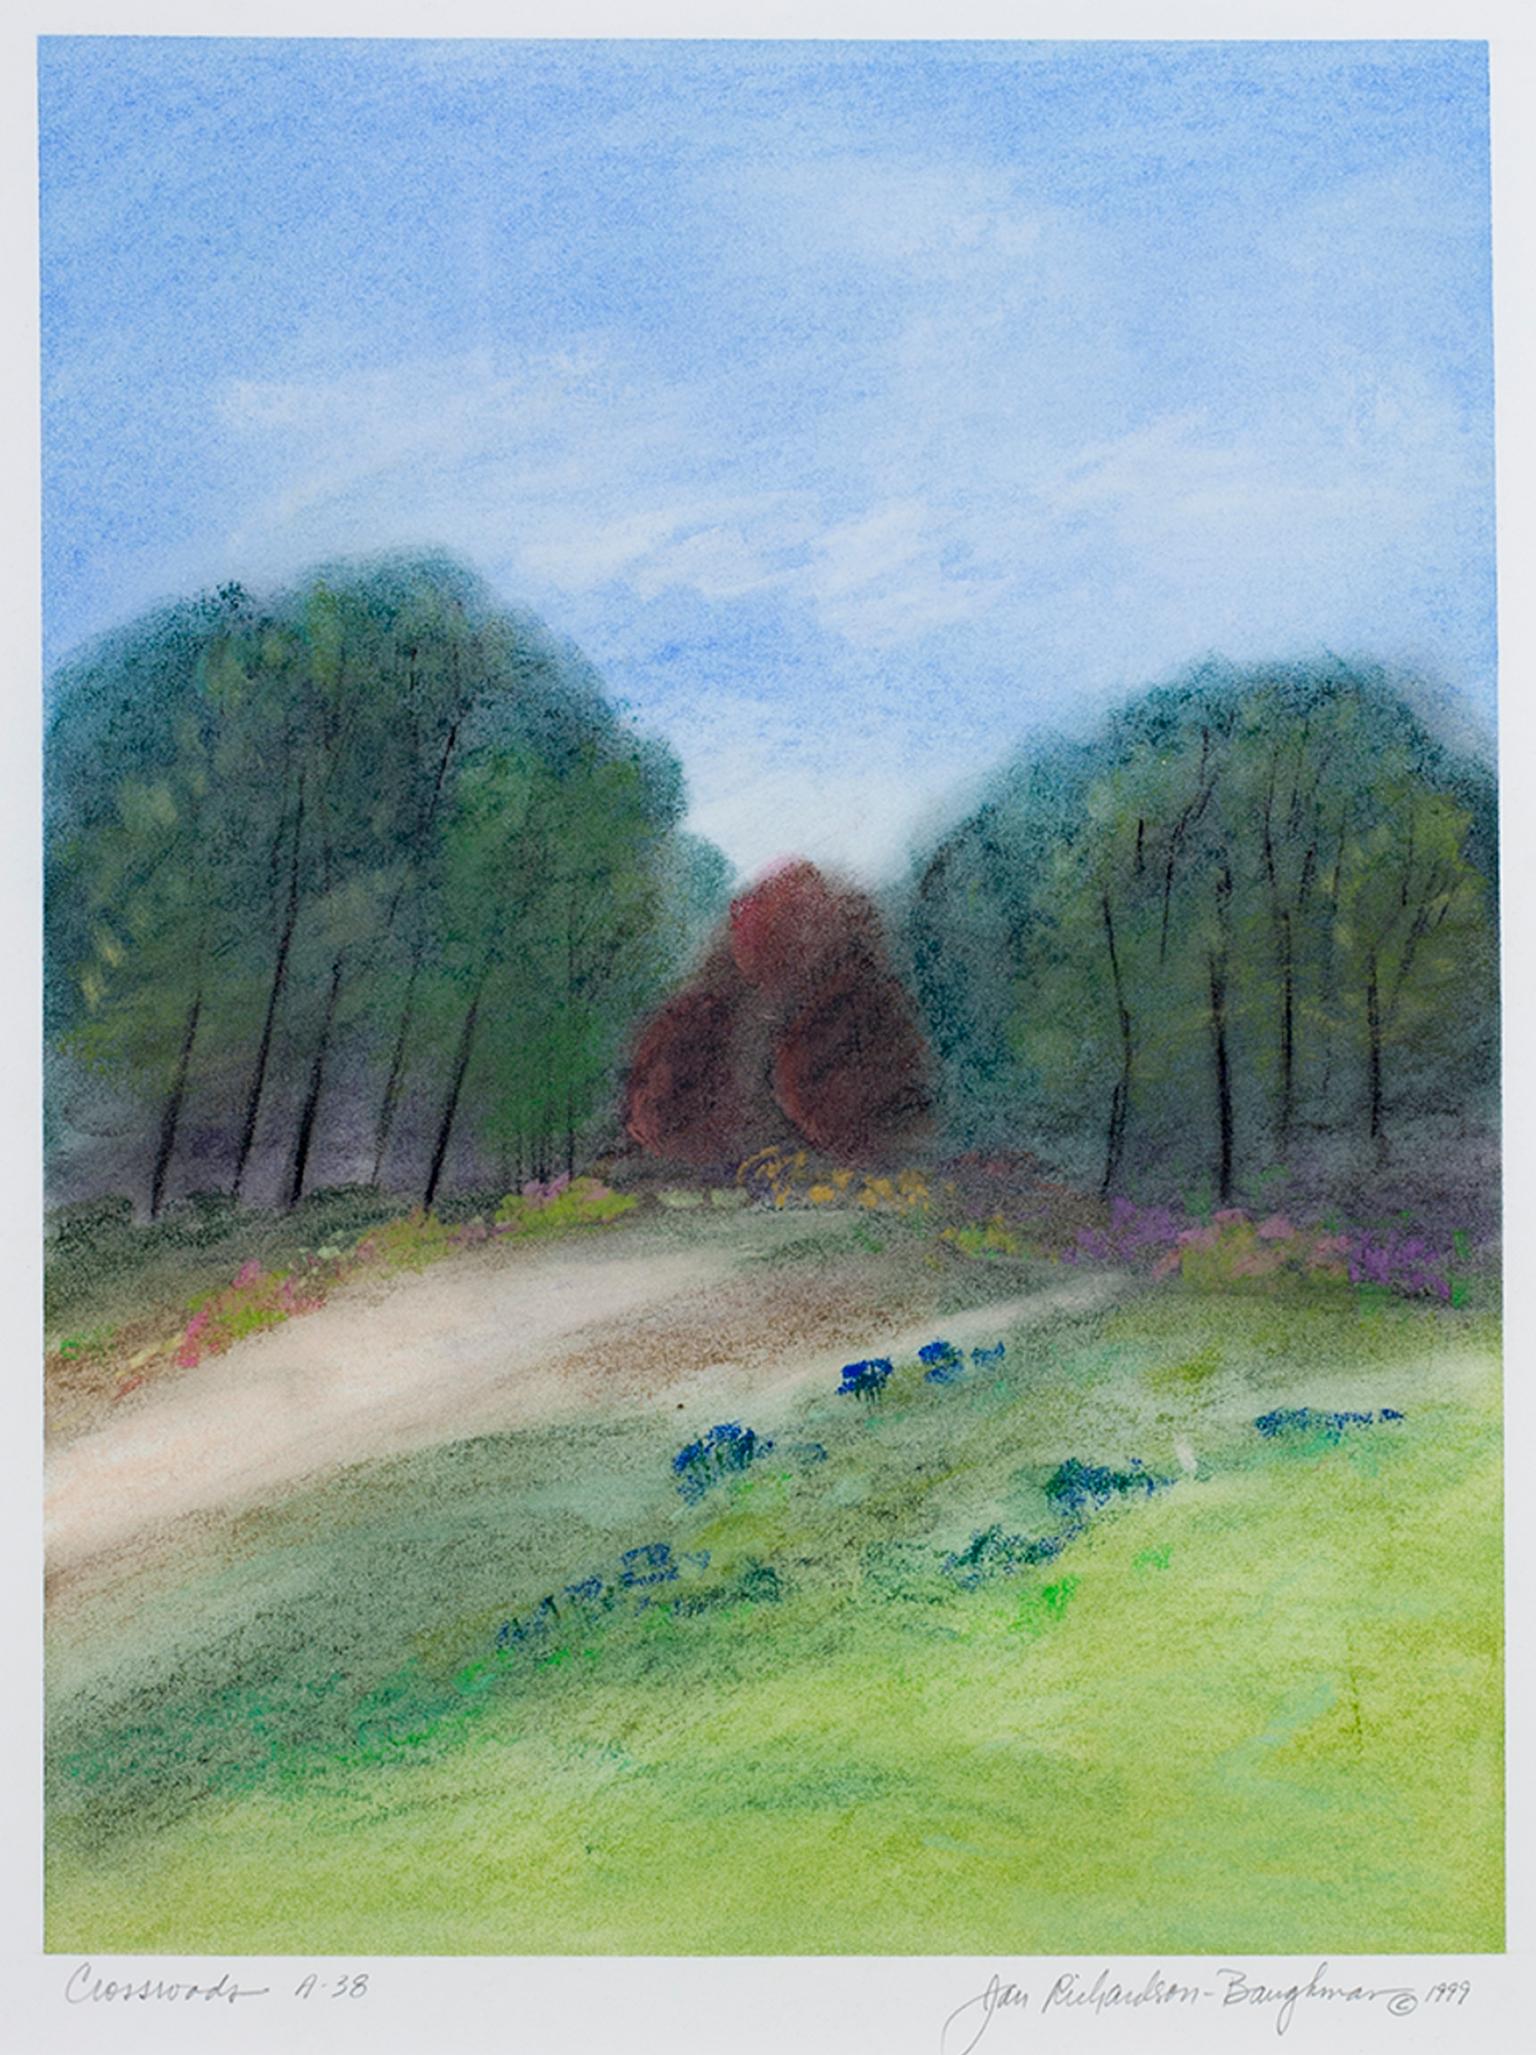 Janet Richardson-Baughman Landscape Art - "Crossroads A-38, " Pastel Landscape signed by Jan Richardson-Baughman